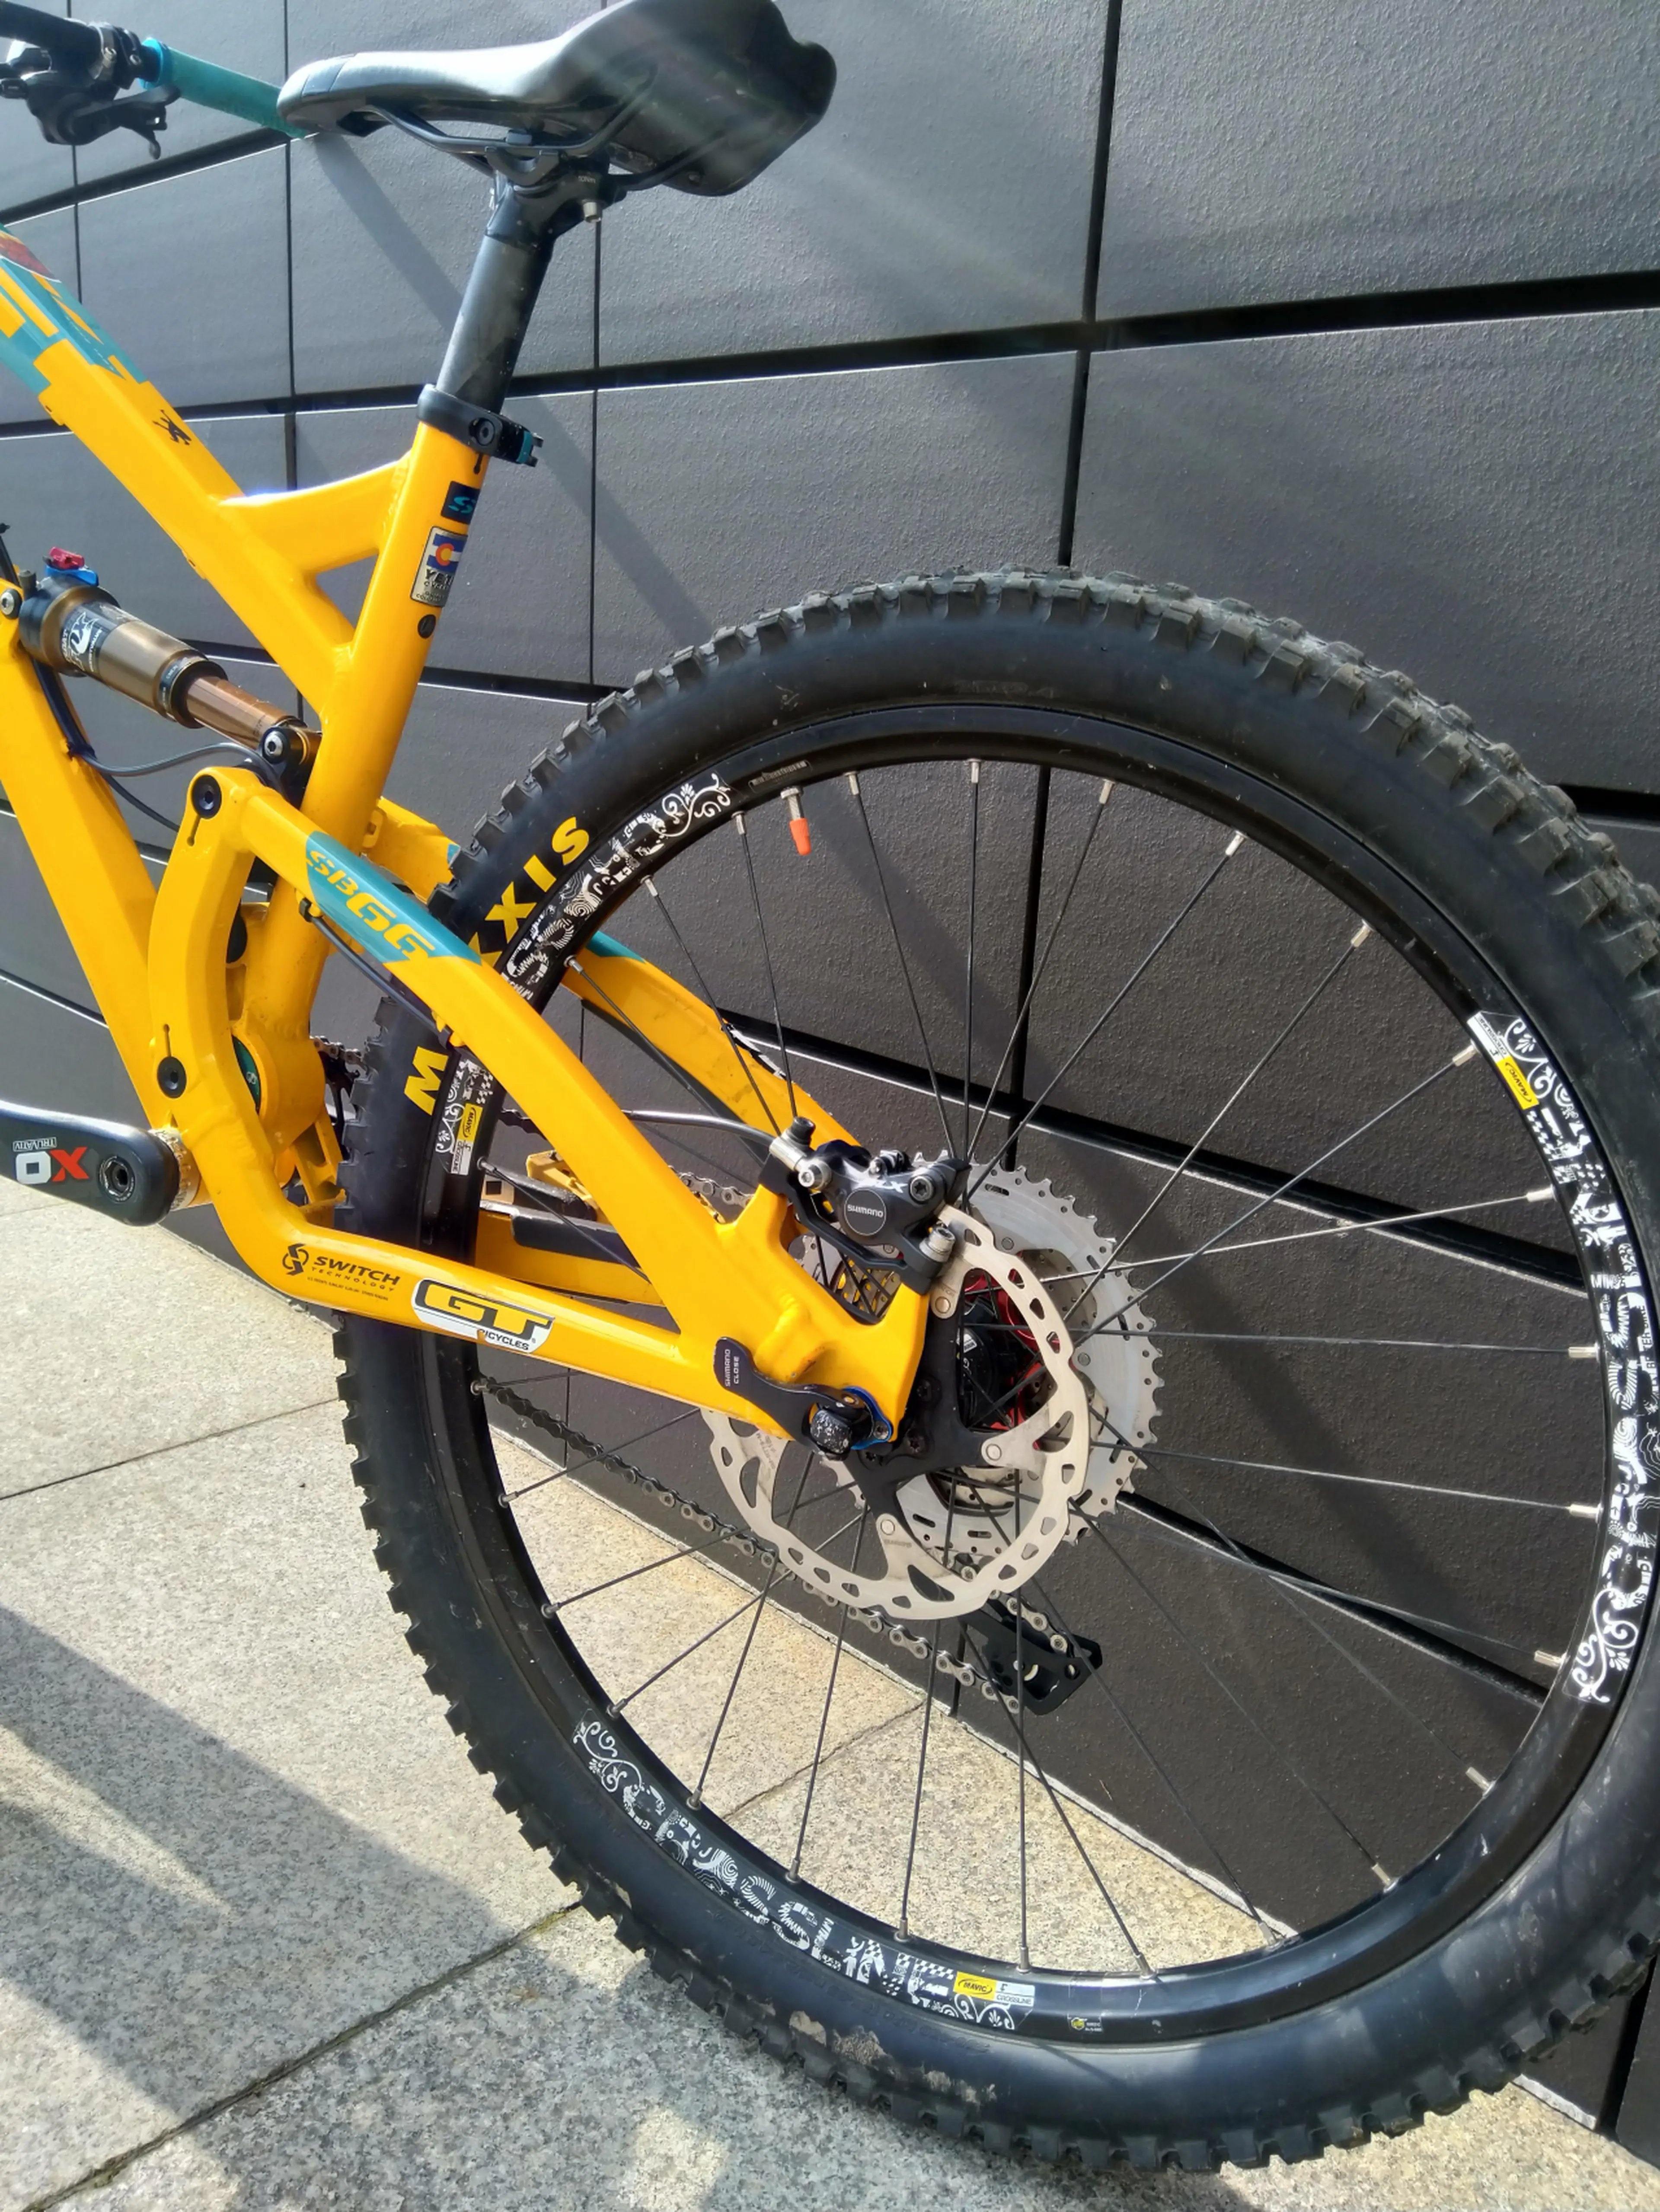 4. (Vândută) Bicicletă Yeti SB66, mărime S, roți 26", an 2014